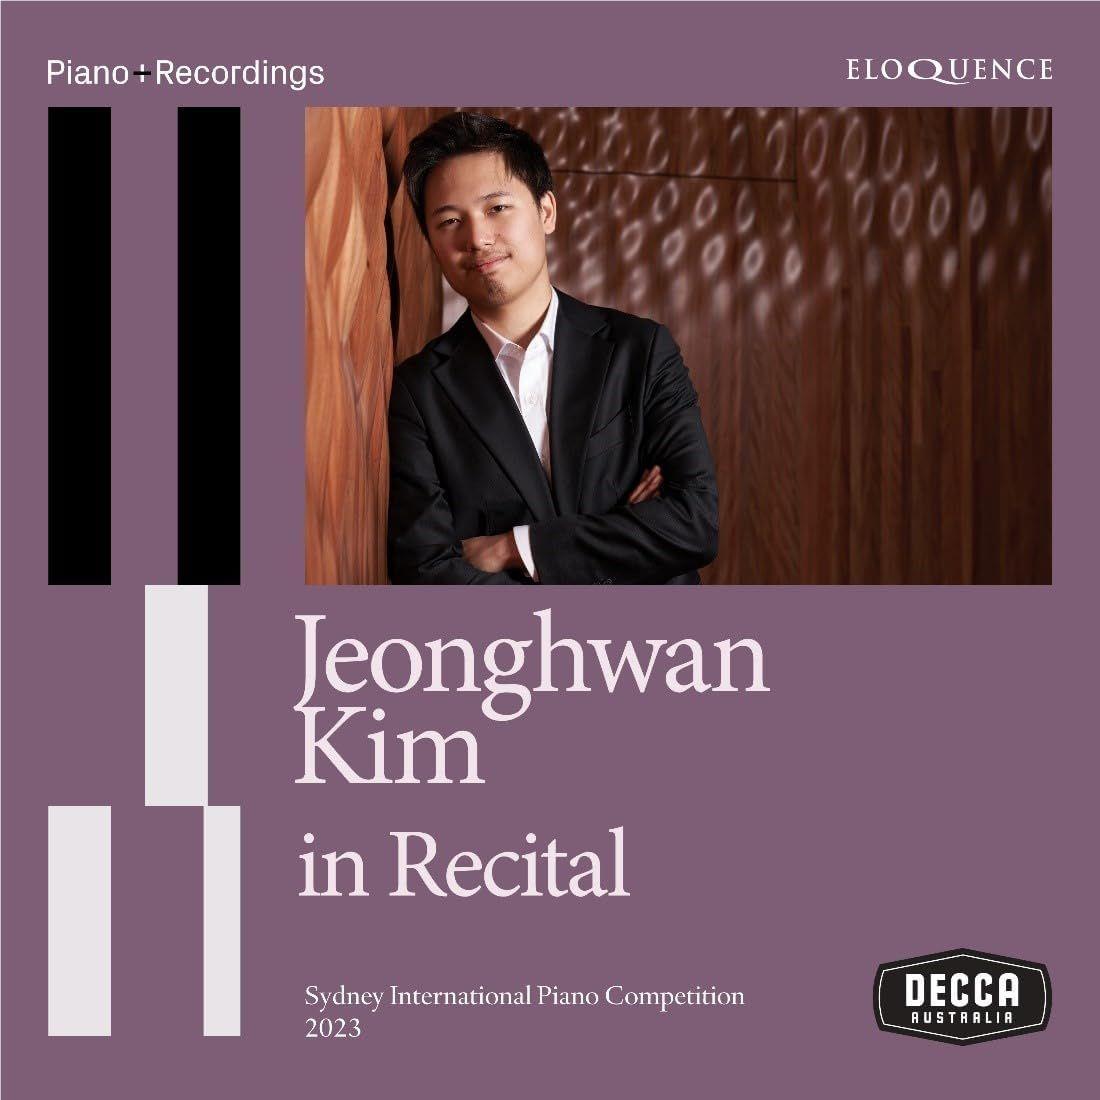 jeonghwan kim in recital - sydney international piano competition 2023